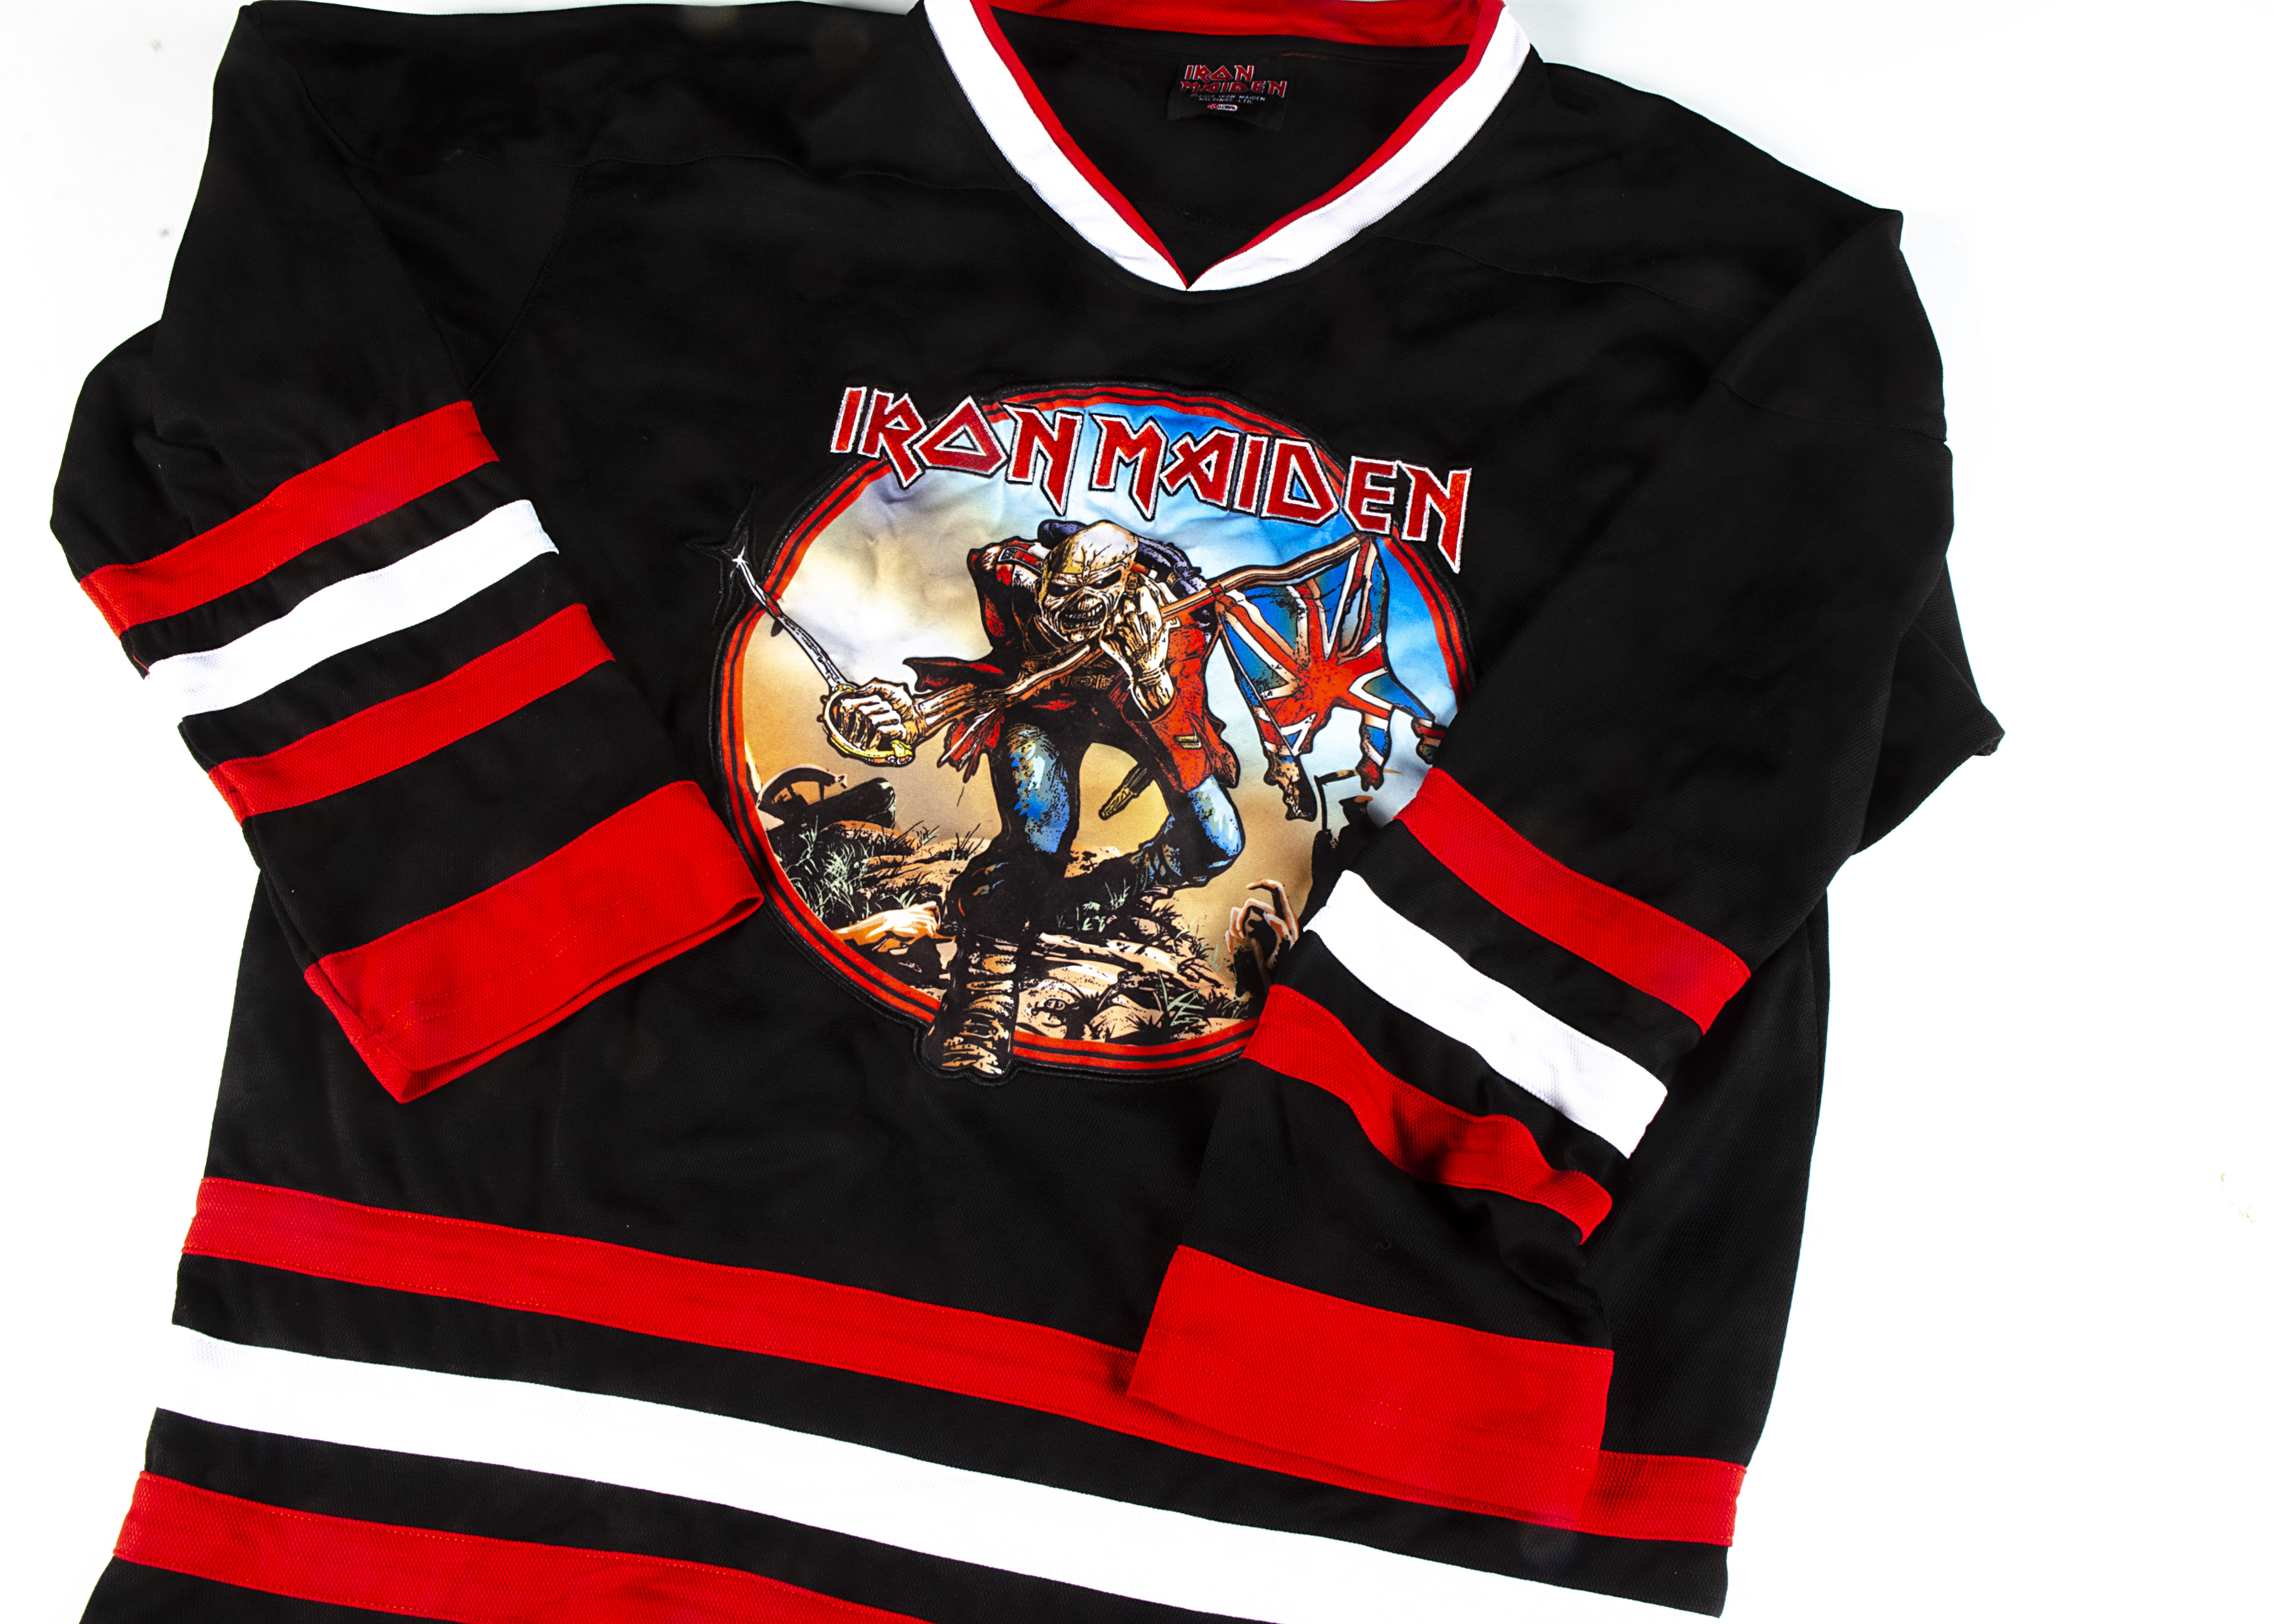 Iron Maiden American style Football Shirt, a heavy duty American style football shirt with long